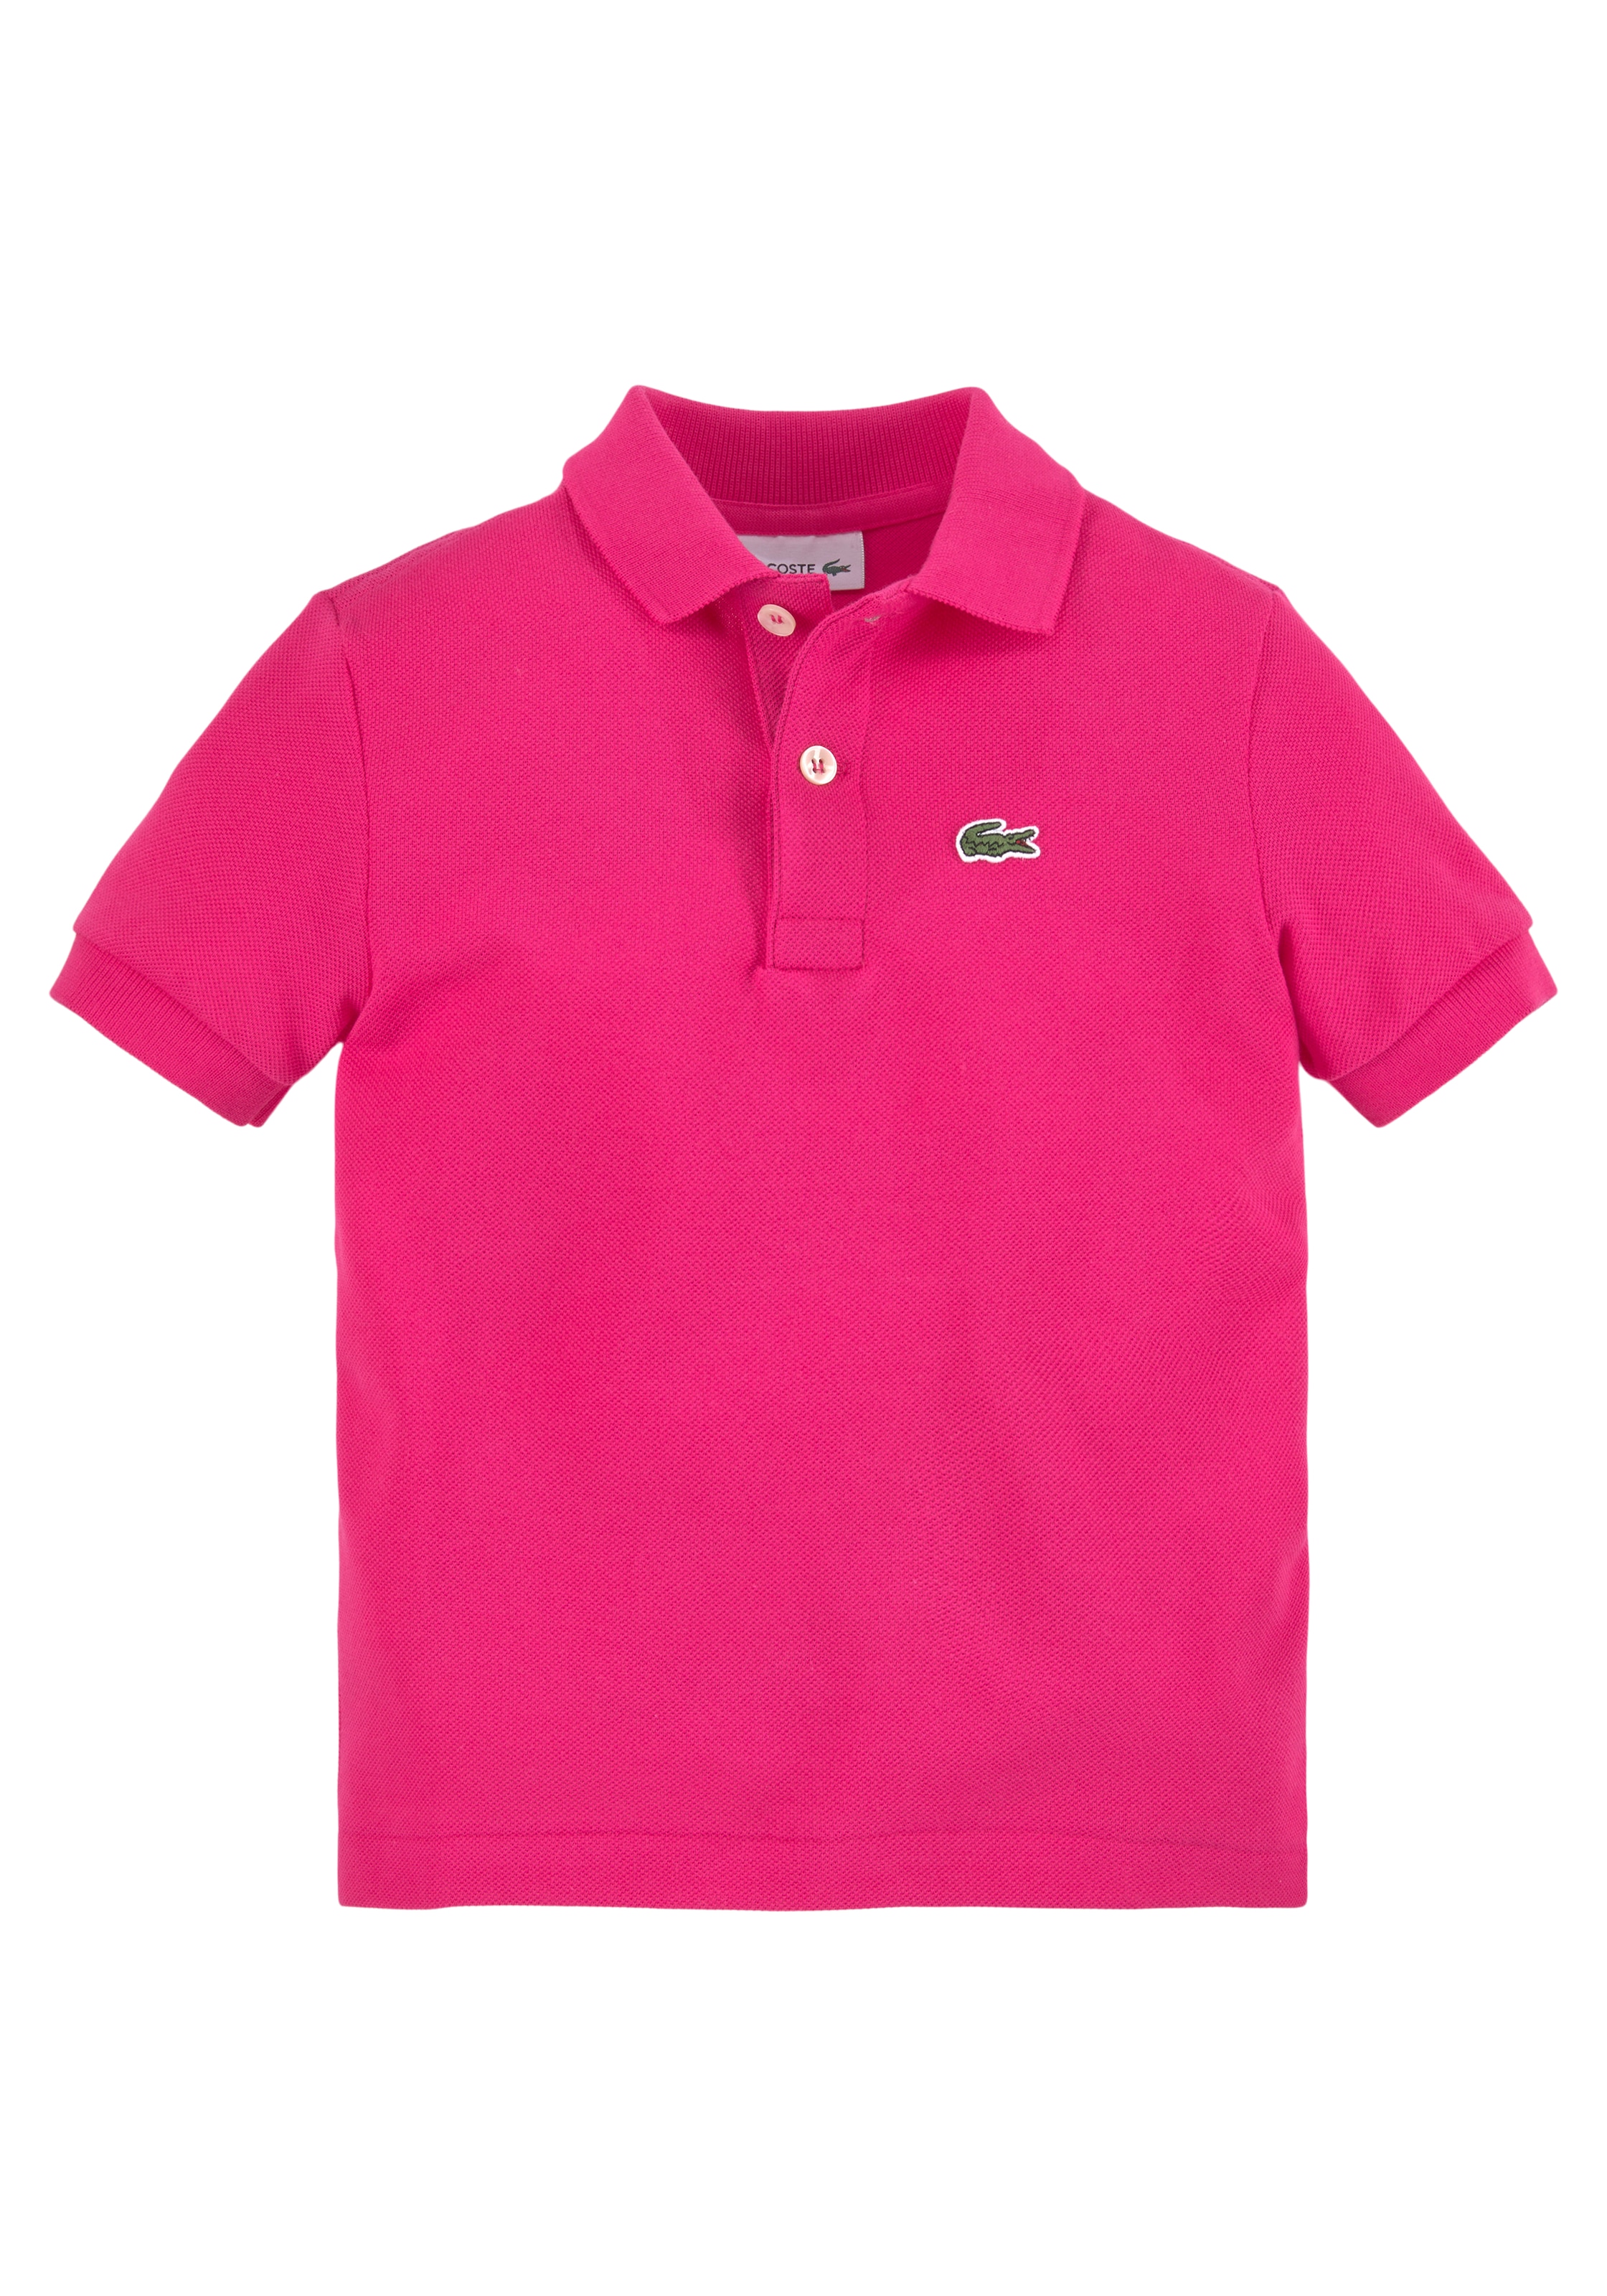 Lacoste Poloshirt, Kinder Kids Junior MiniMe,Junior, Kids Polo mit aufgesticktem  Kroko kaufen bei OTTO | Poloshirts